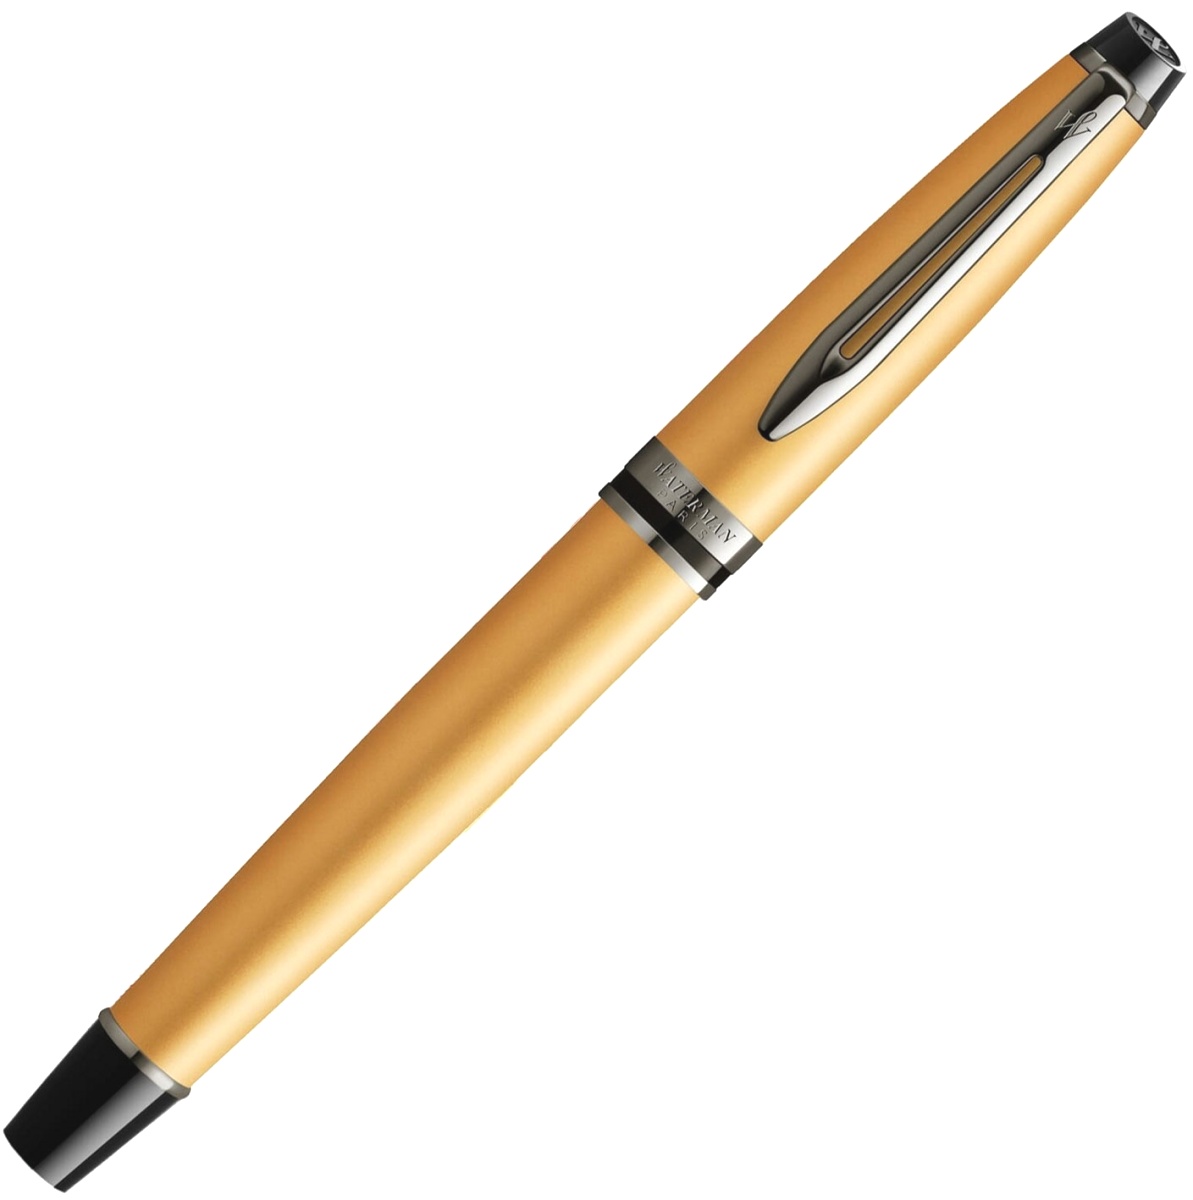  Ручка-роллер Waterman Expert DeLuxe, Metallic Gold RT, фото 2